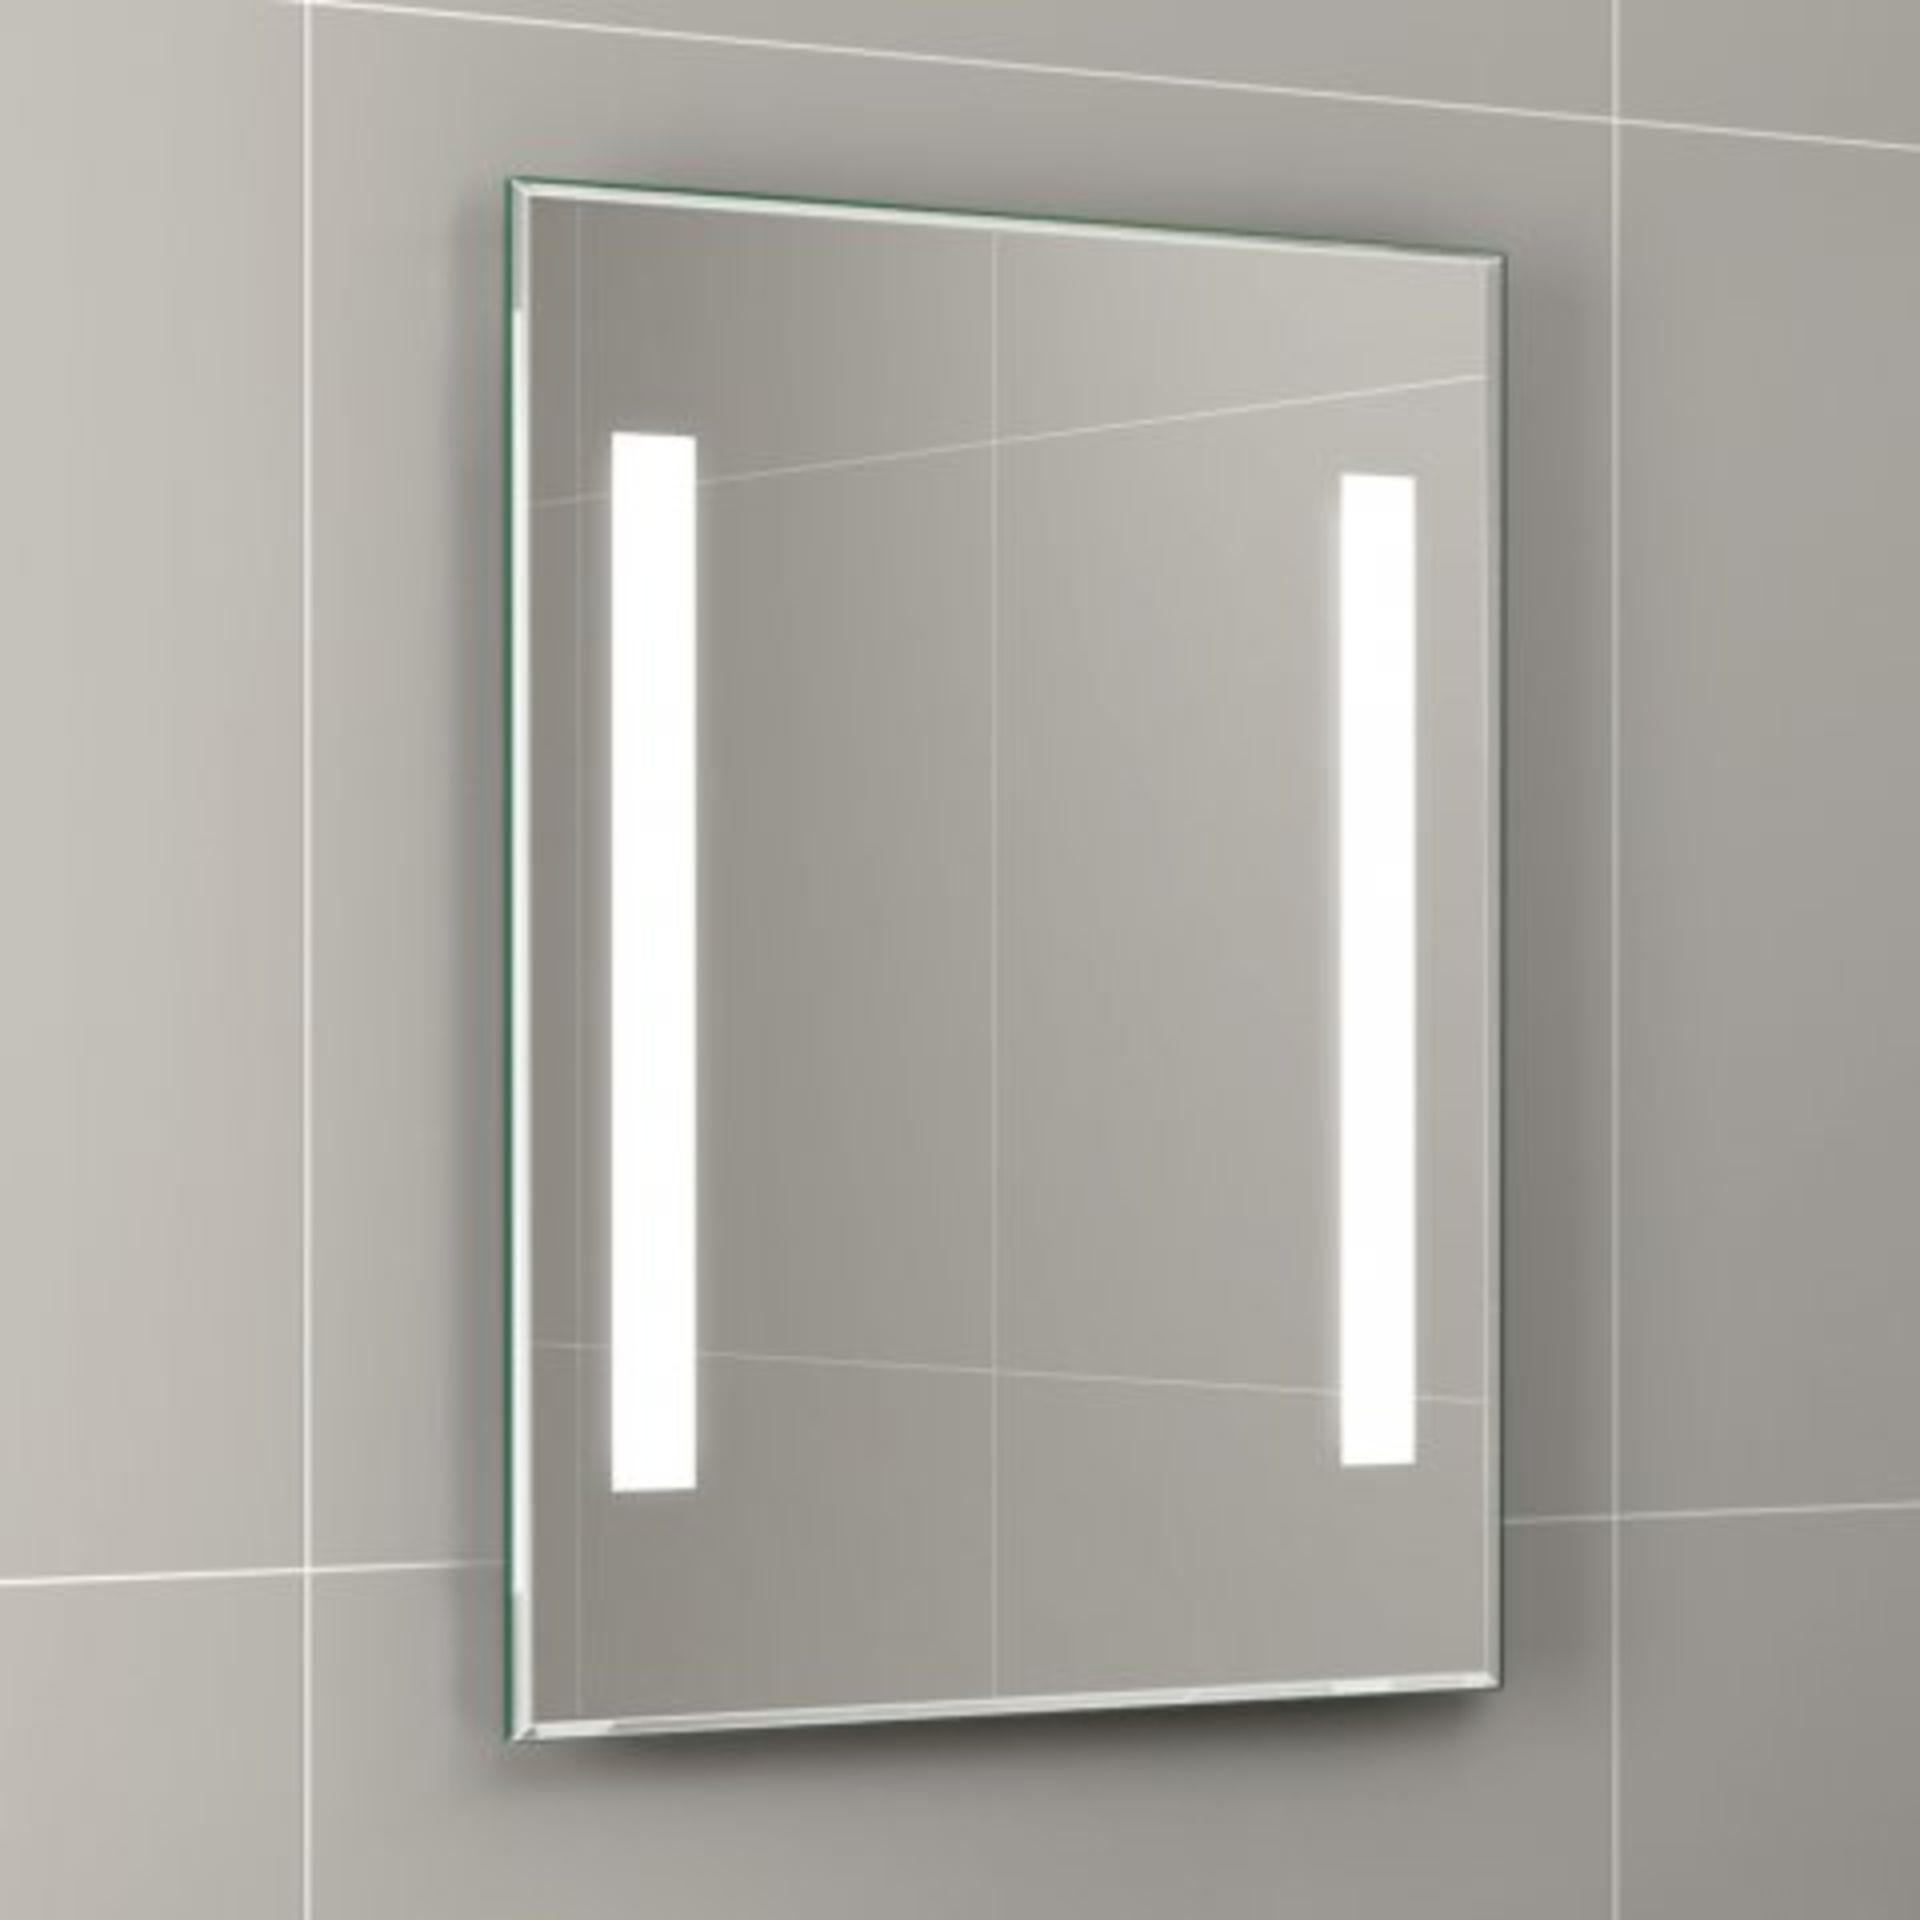 (J13) 450x600mm Omega Illuminated LED Mirror RRP £349.99. Rectangular mirror with smart edges, - Image 2 of 4